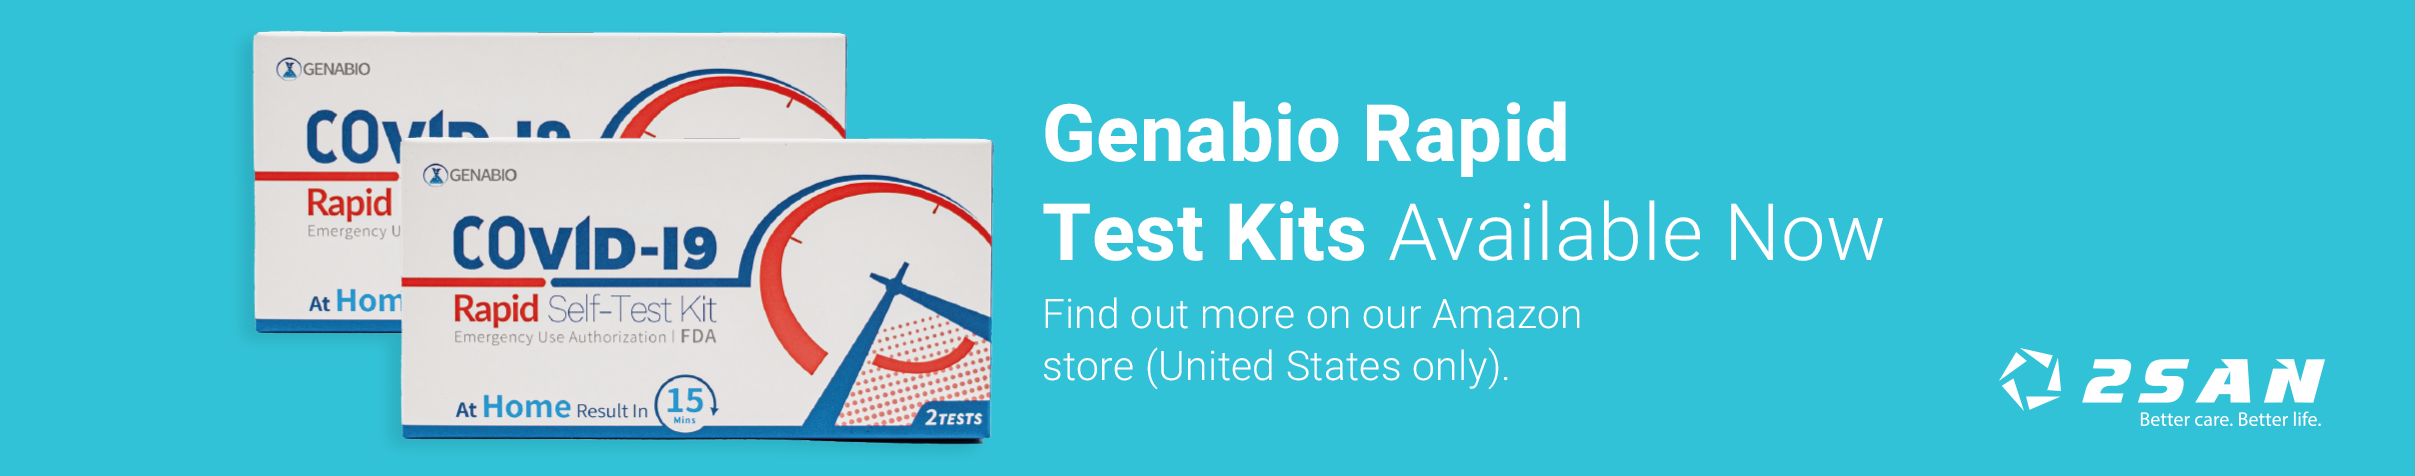 Genabio Rapid Test Kits Available Now